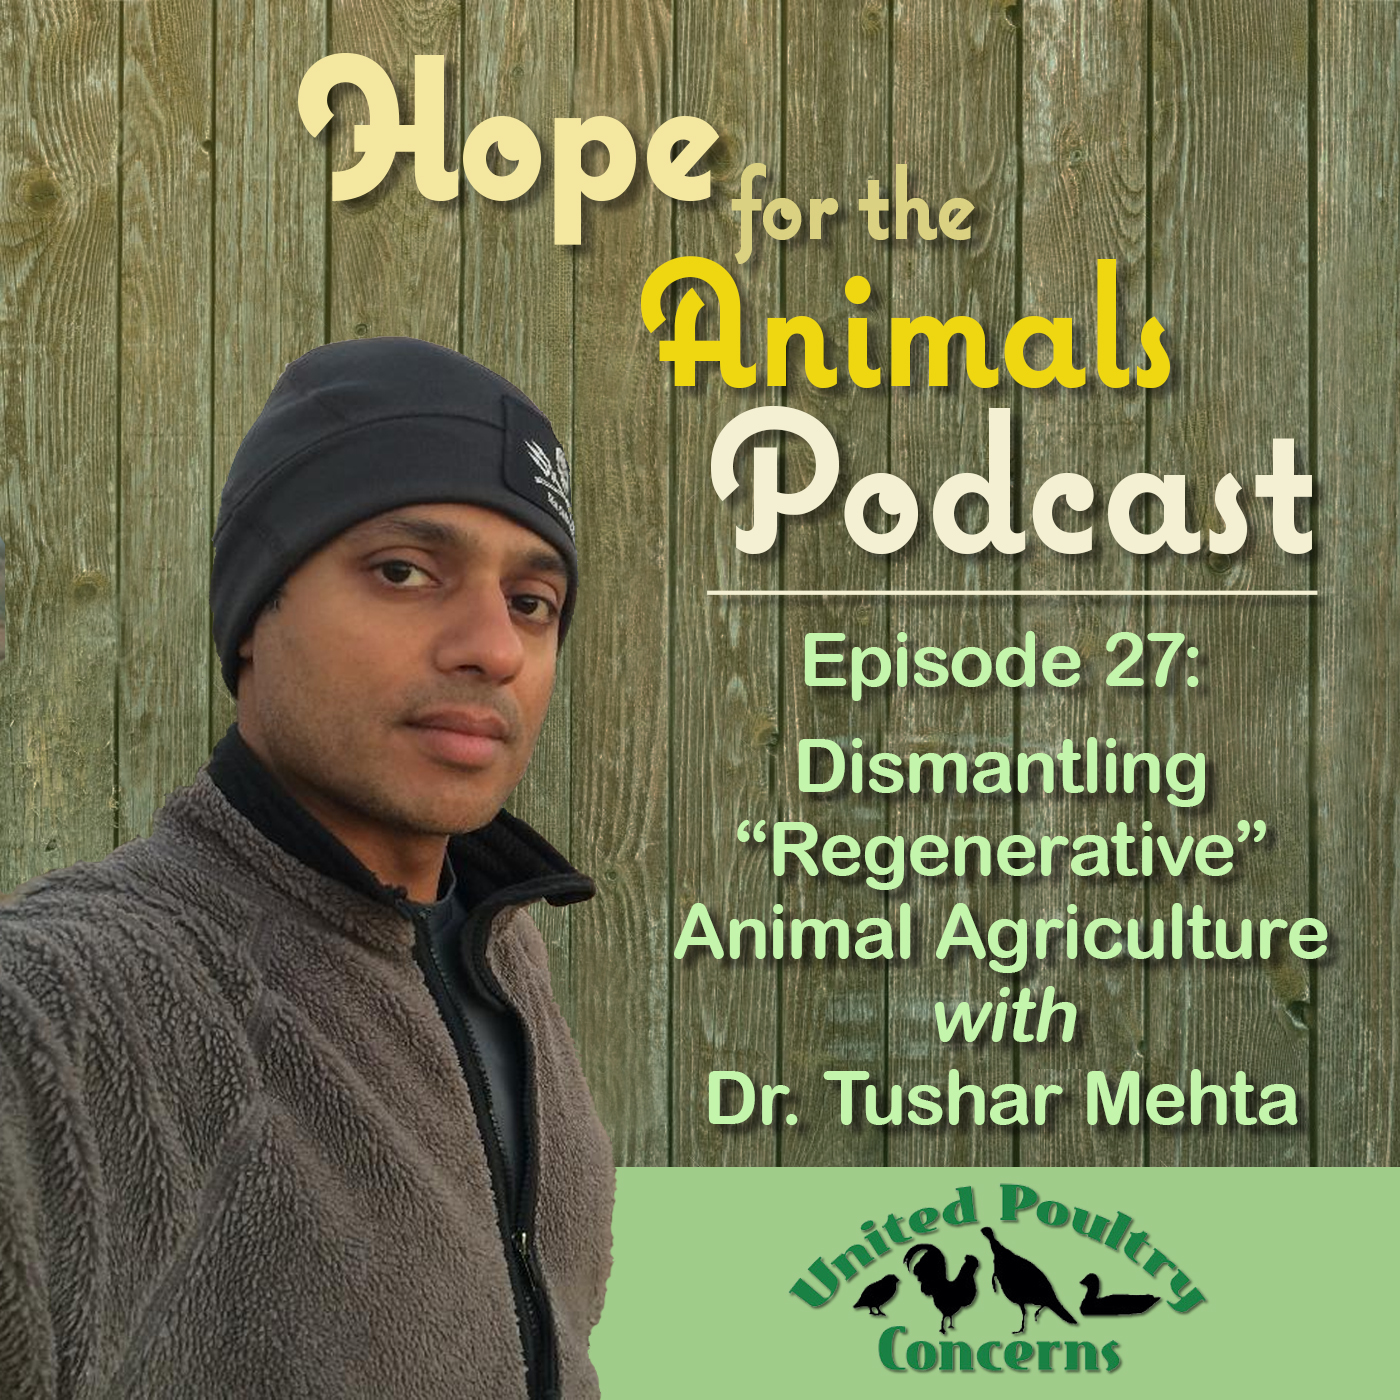 Episode 27: Dismantling “Regenerative” Animal Agriculture with Dr. Tushar Mehta